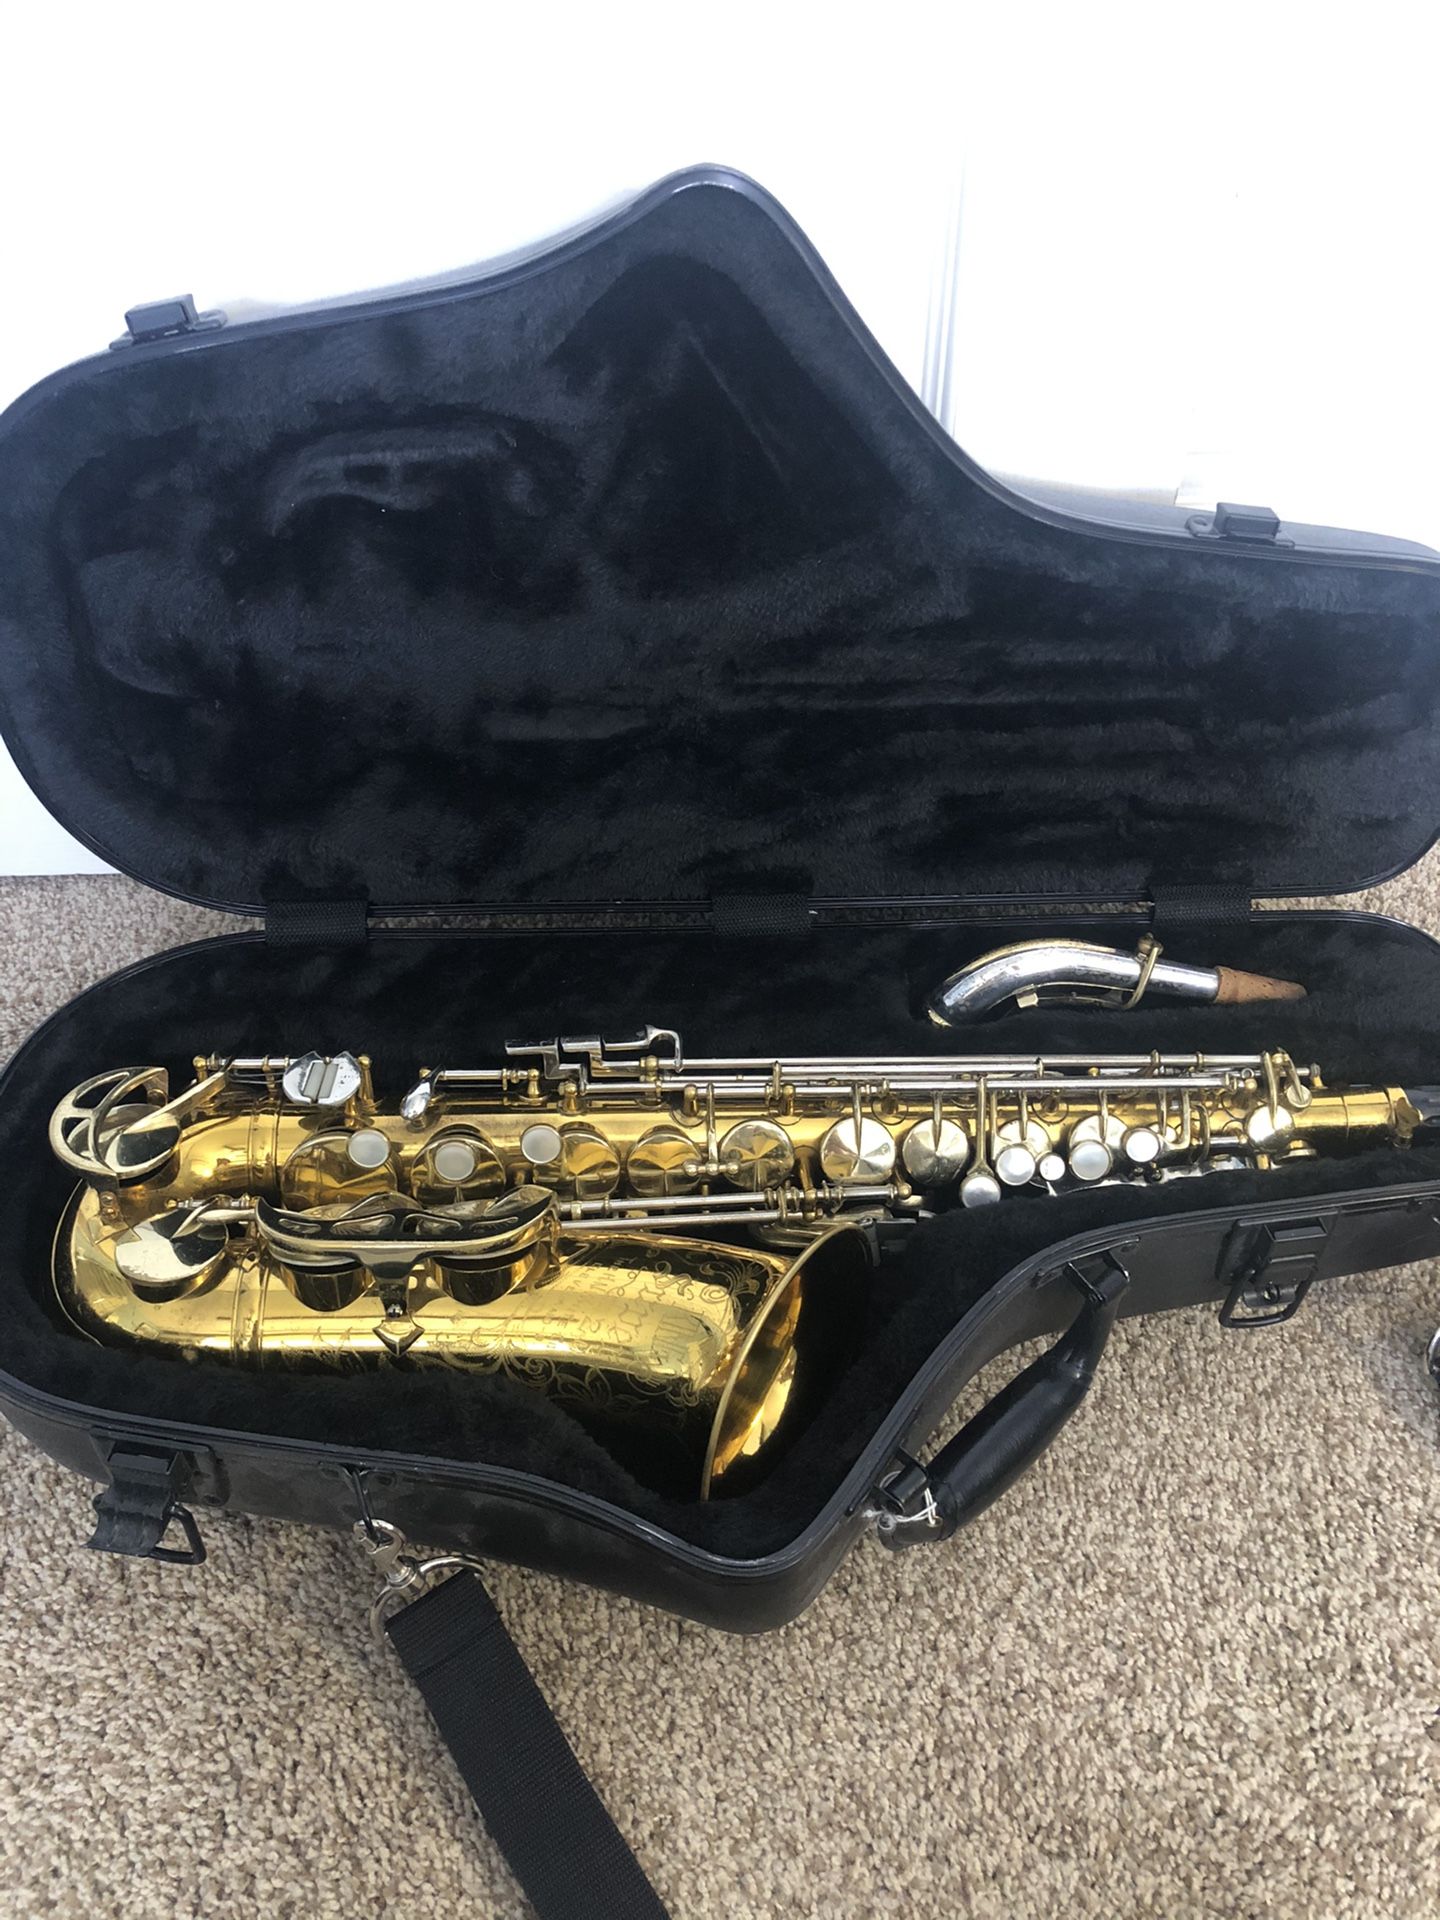 King Super 20 alto saxophone